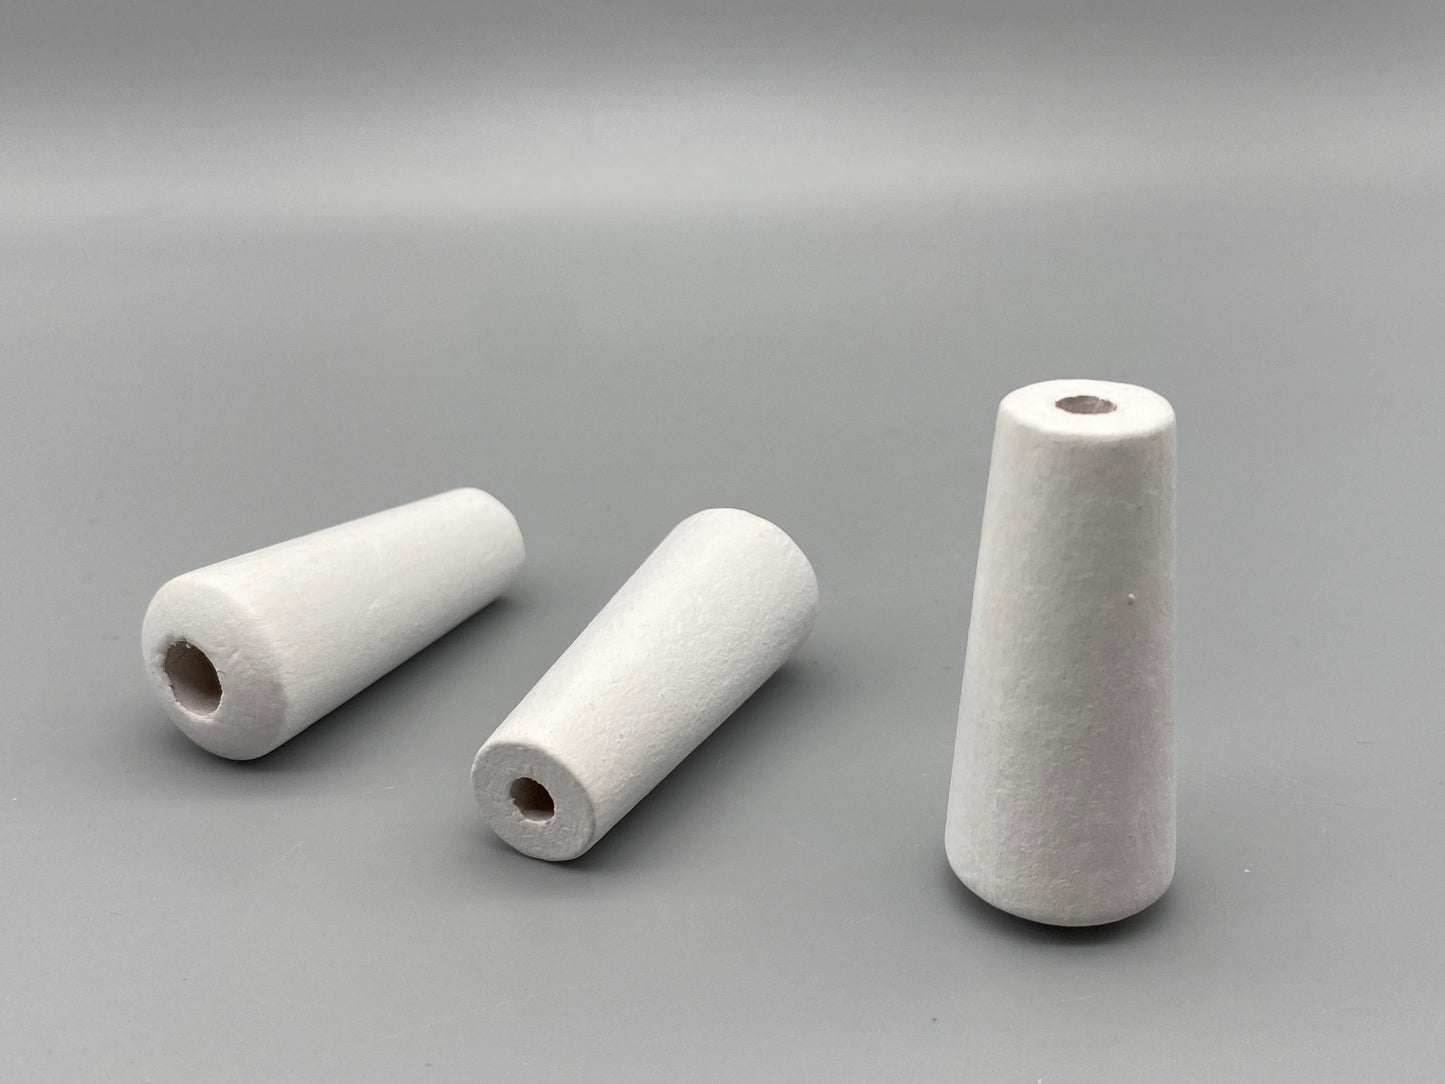 3x Slim White Wooden Blinds Acorns - Cord Pull / Light Pulls - Medium & Large Sizes - Pack of 3